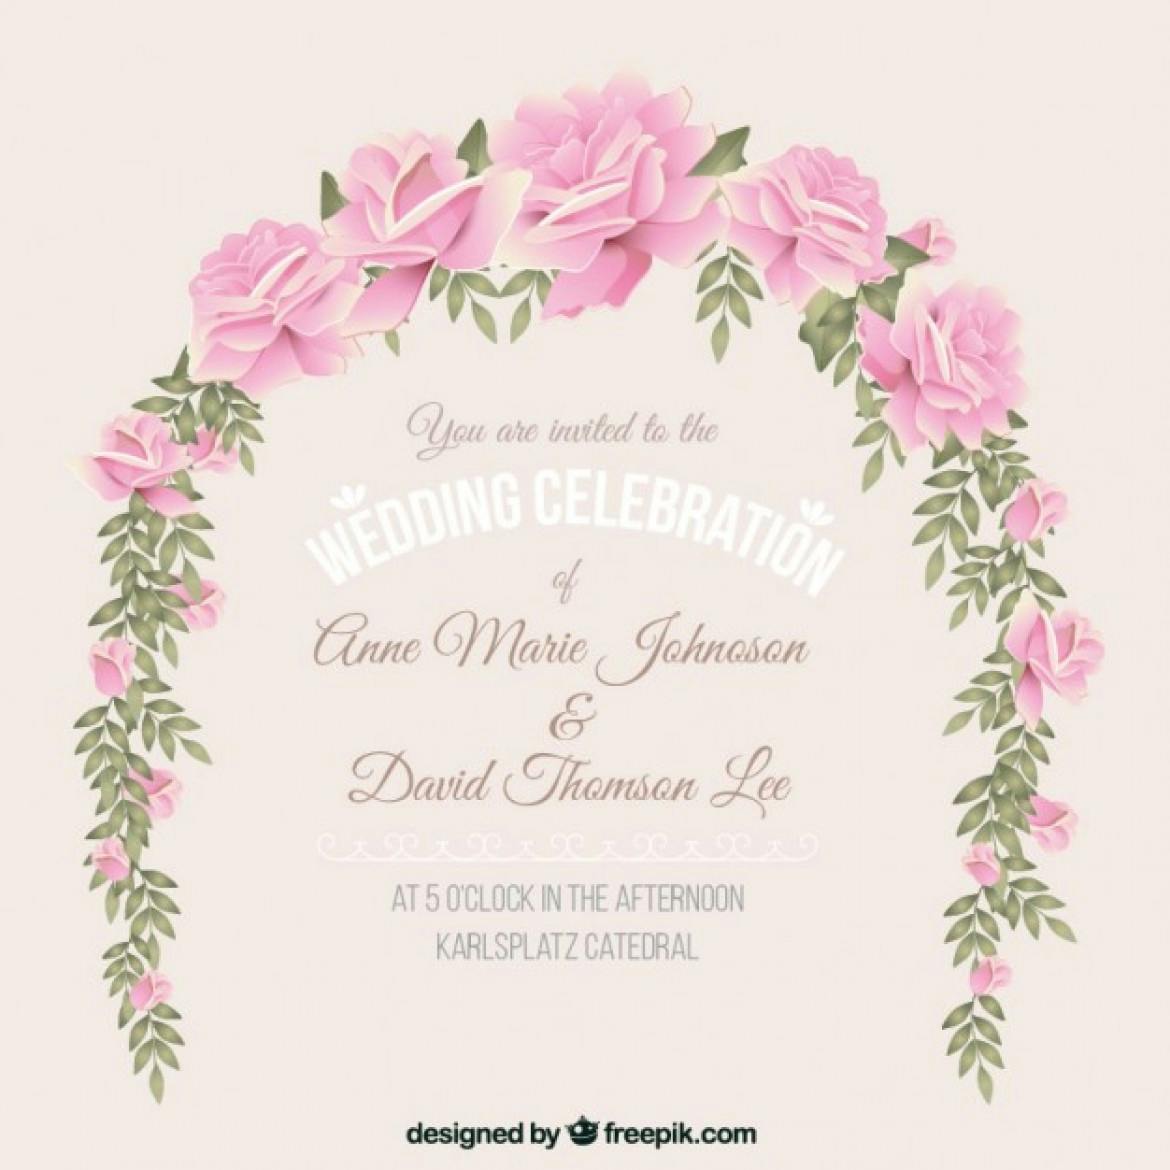 wpid-wedding-invitation-with-floral-wreath_23-2147509916-1170x1170